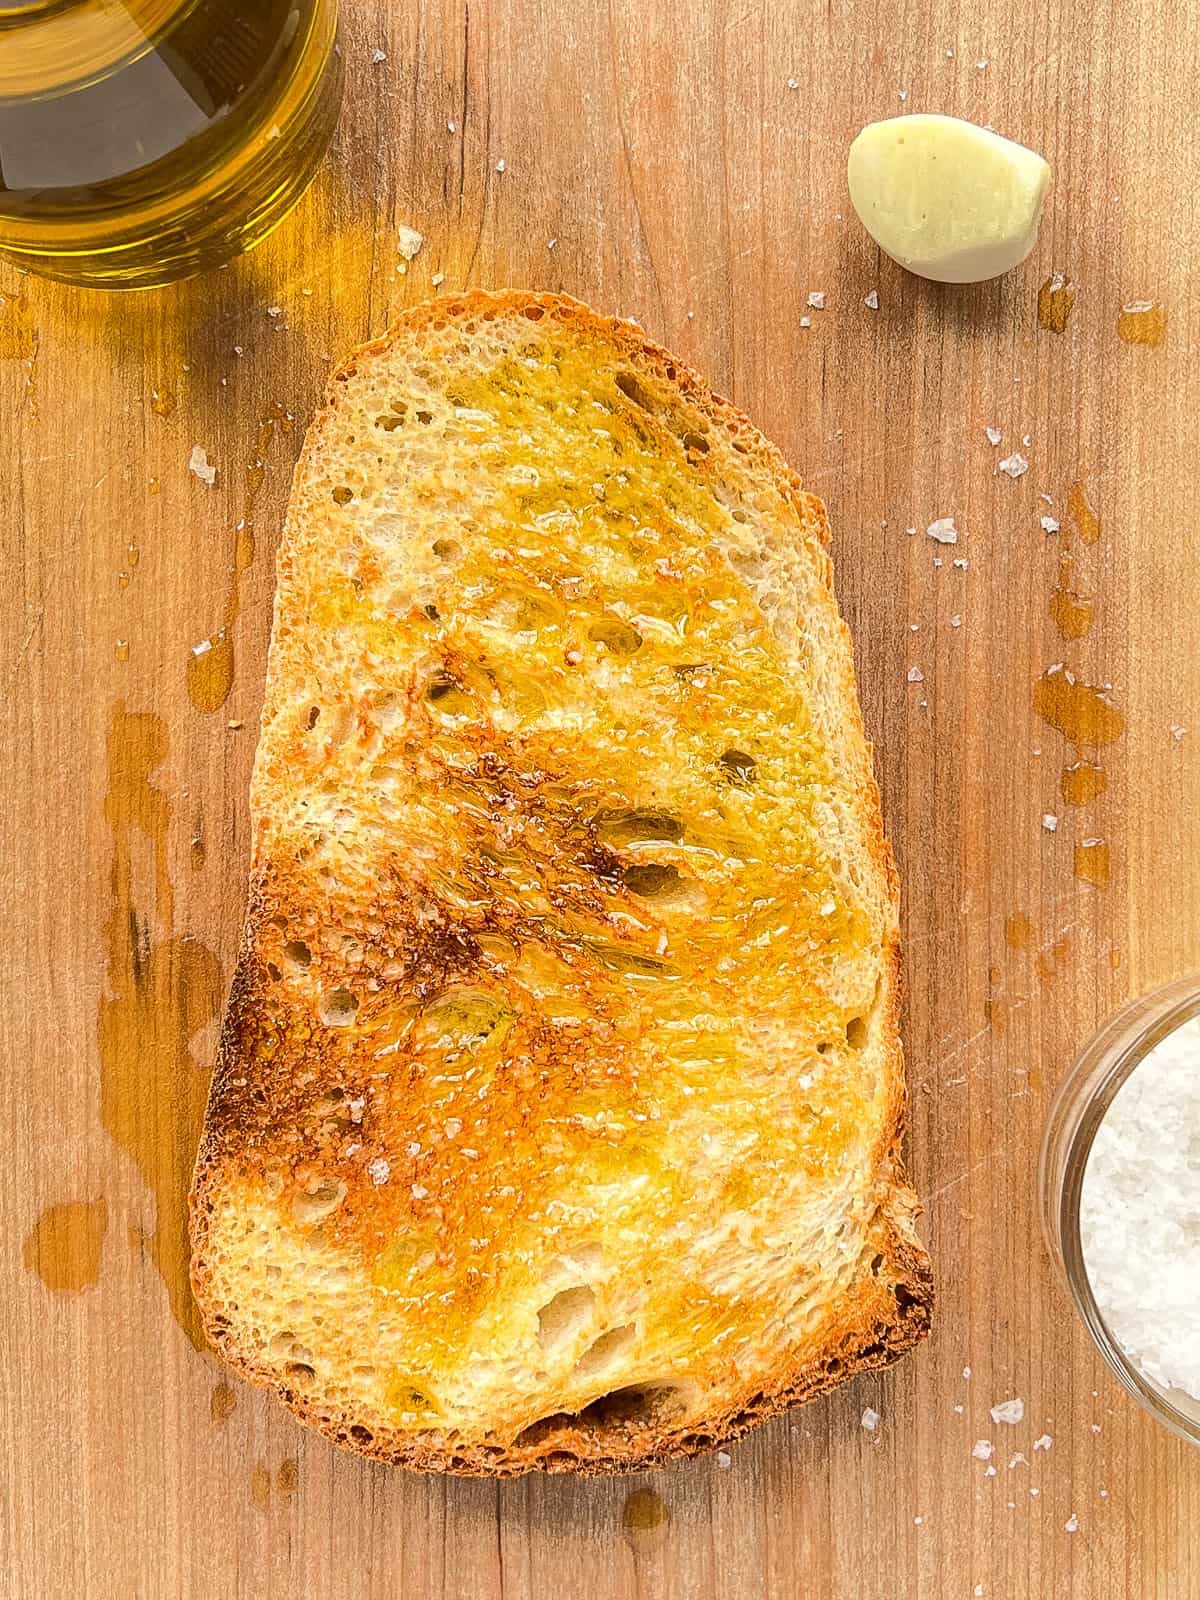 A golden slice of garlic toast.